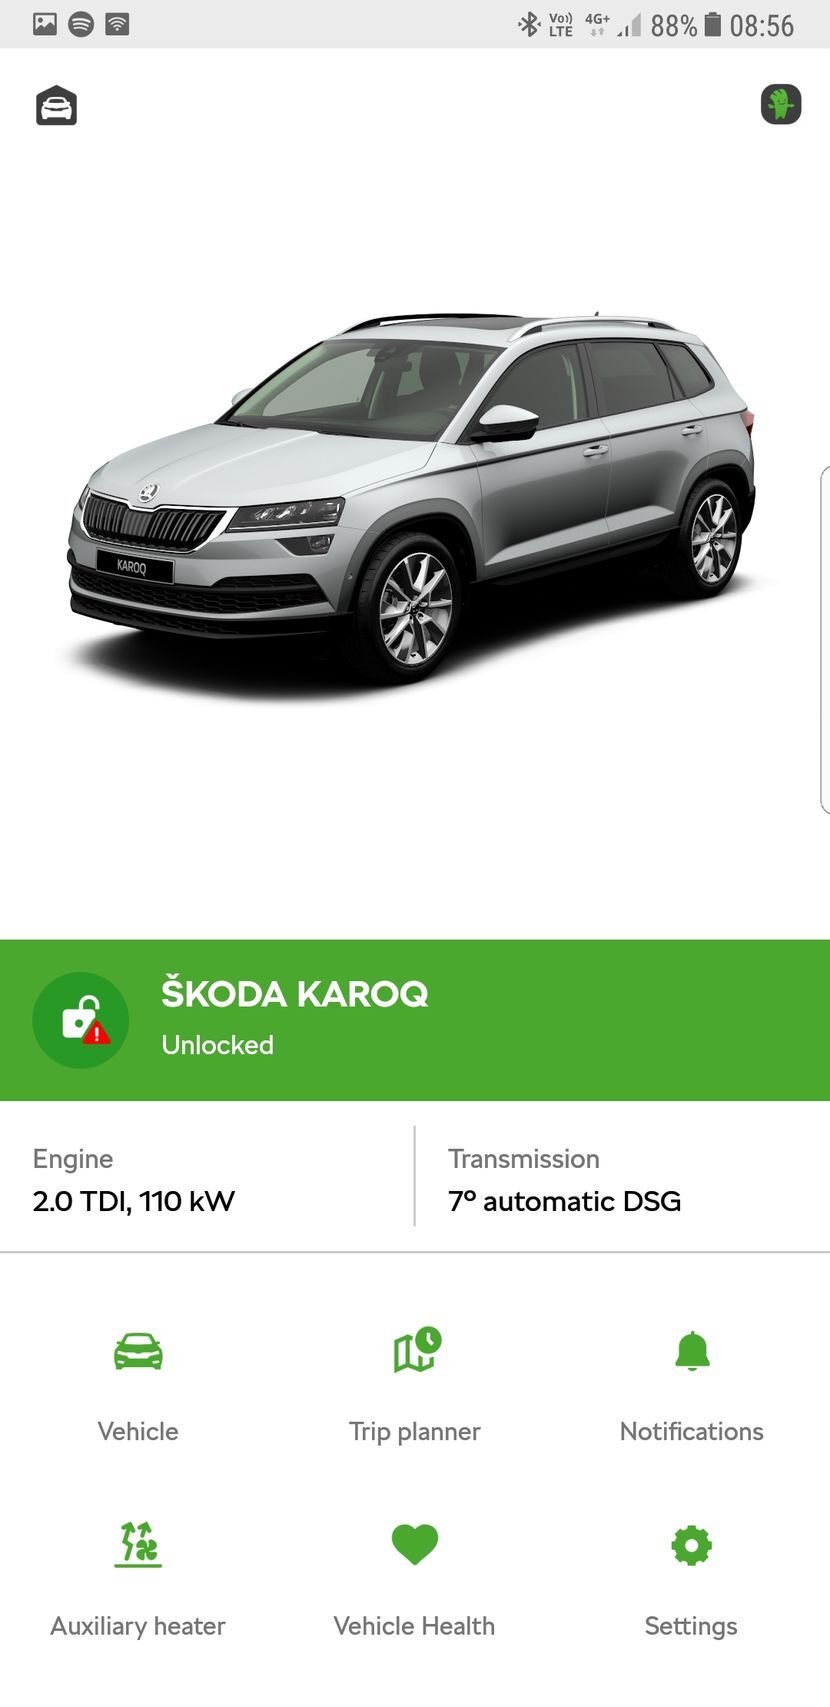 Aplikace Škoda Connect